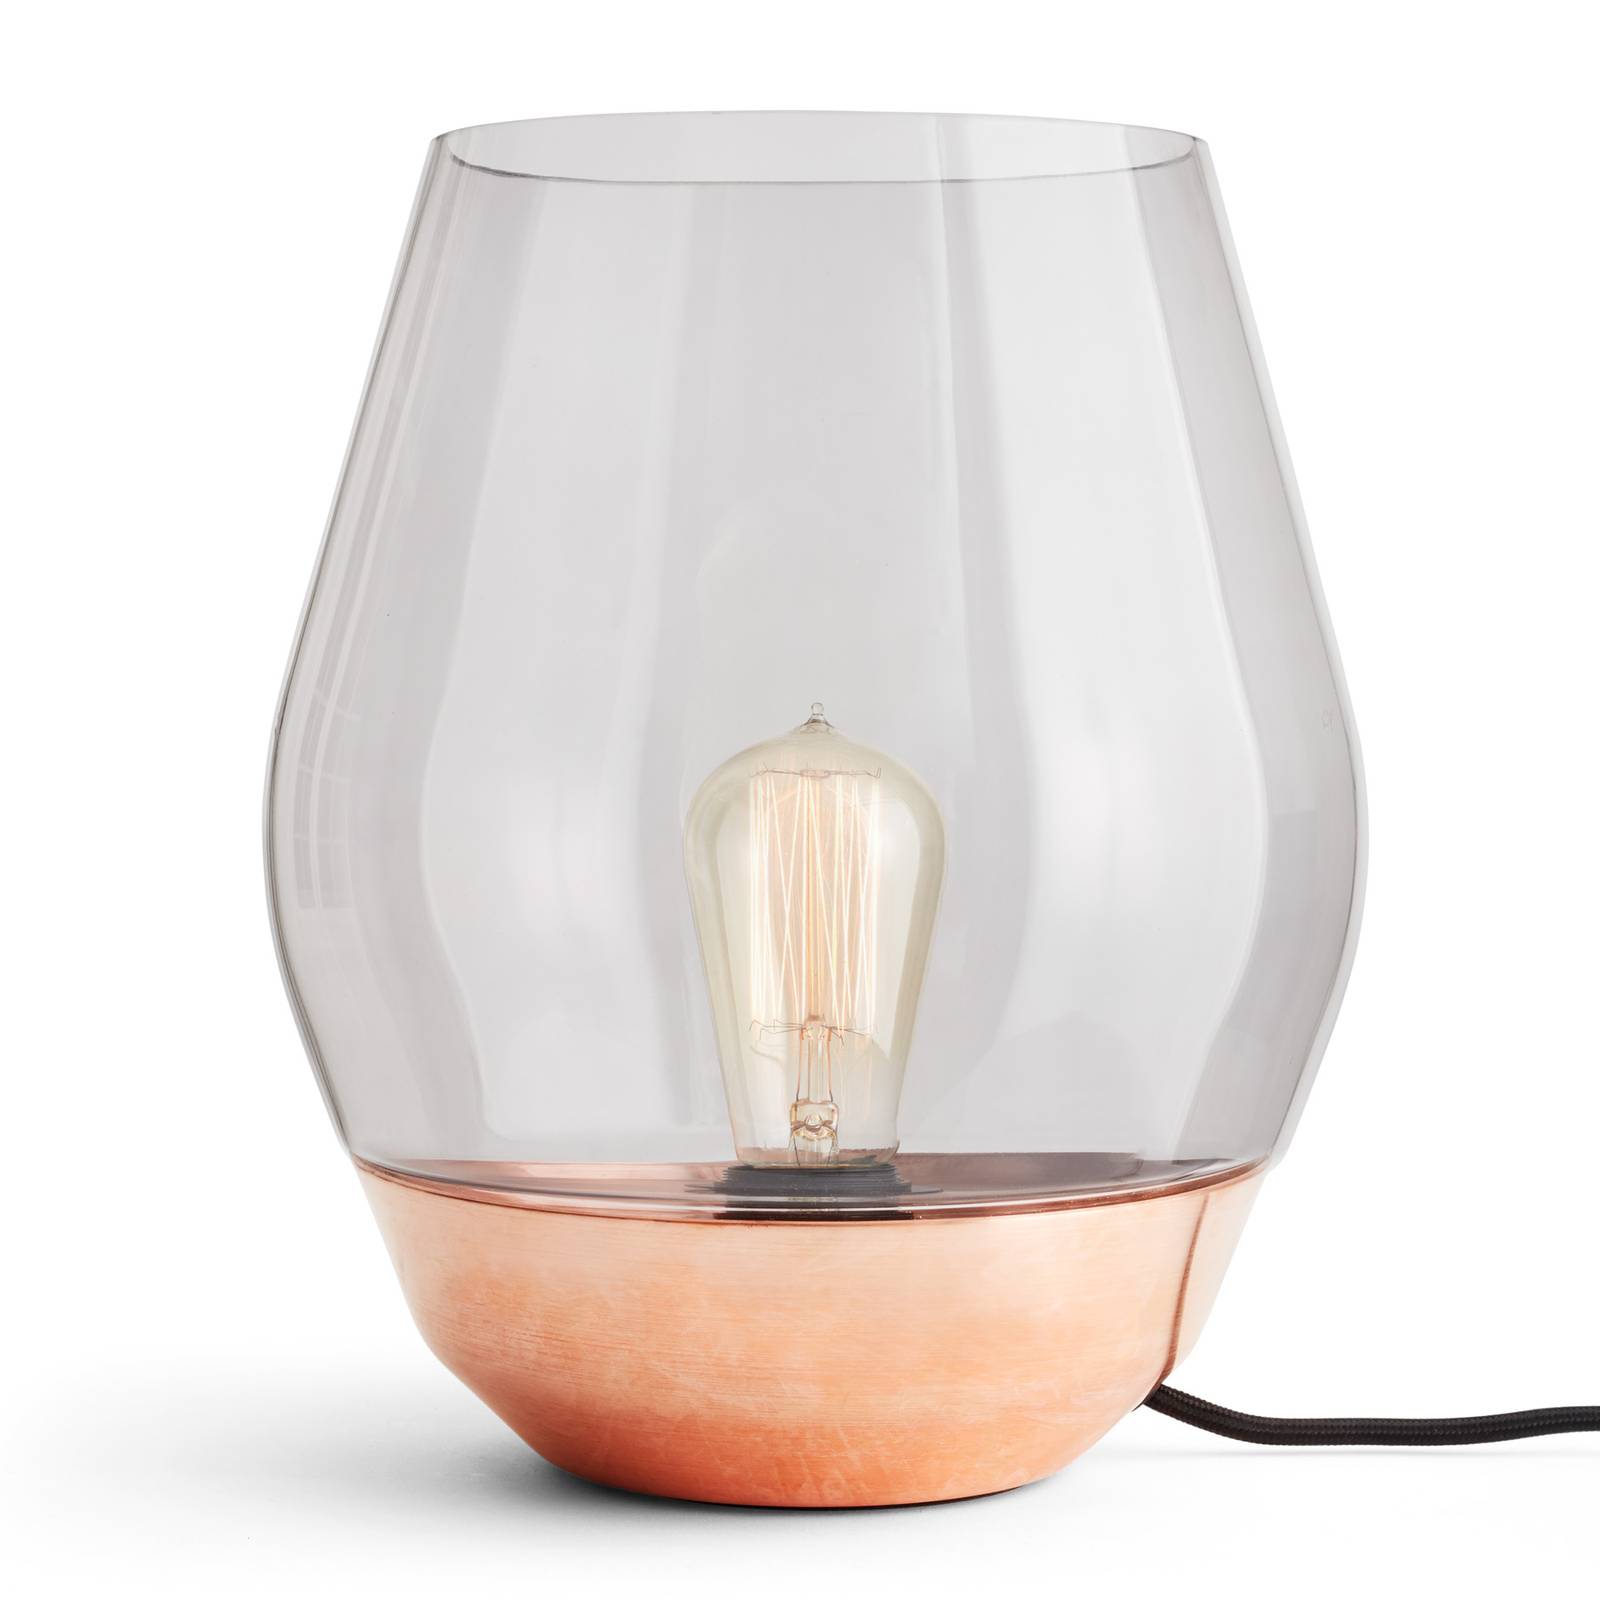 Image of New Works Bowl lampe à poser cuivre/verre fumé 5712826205105